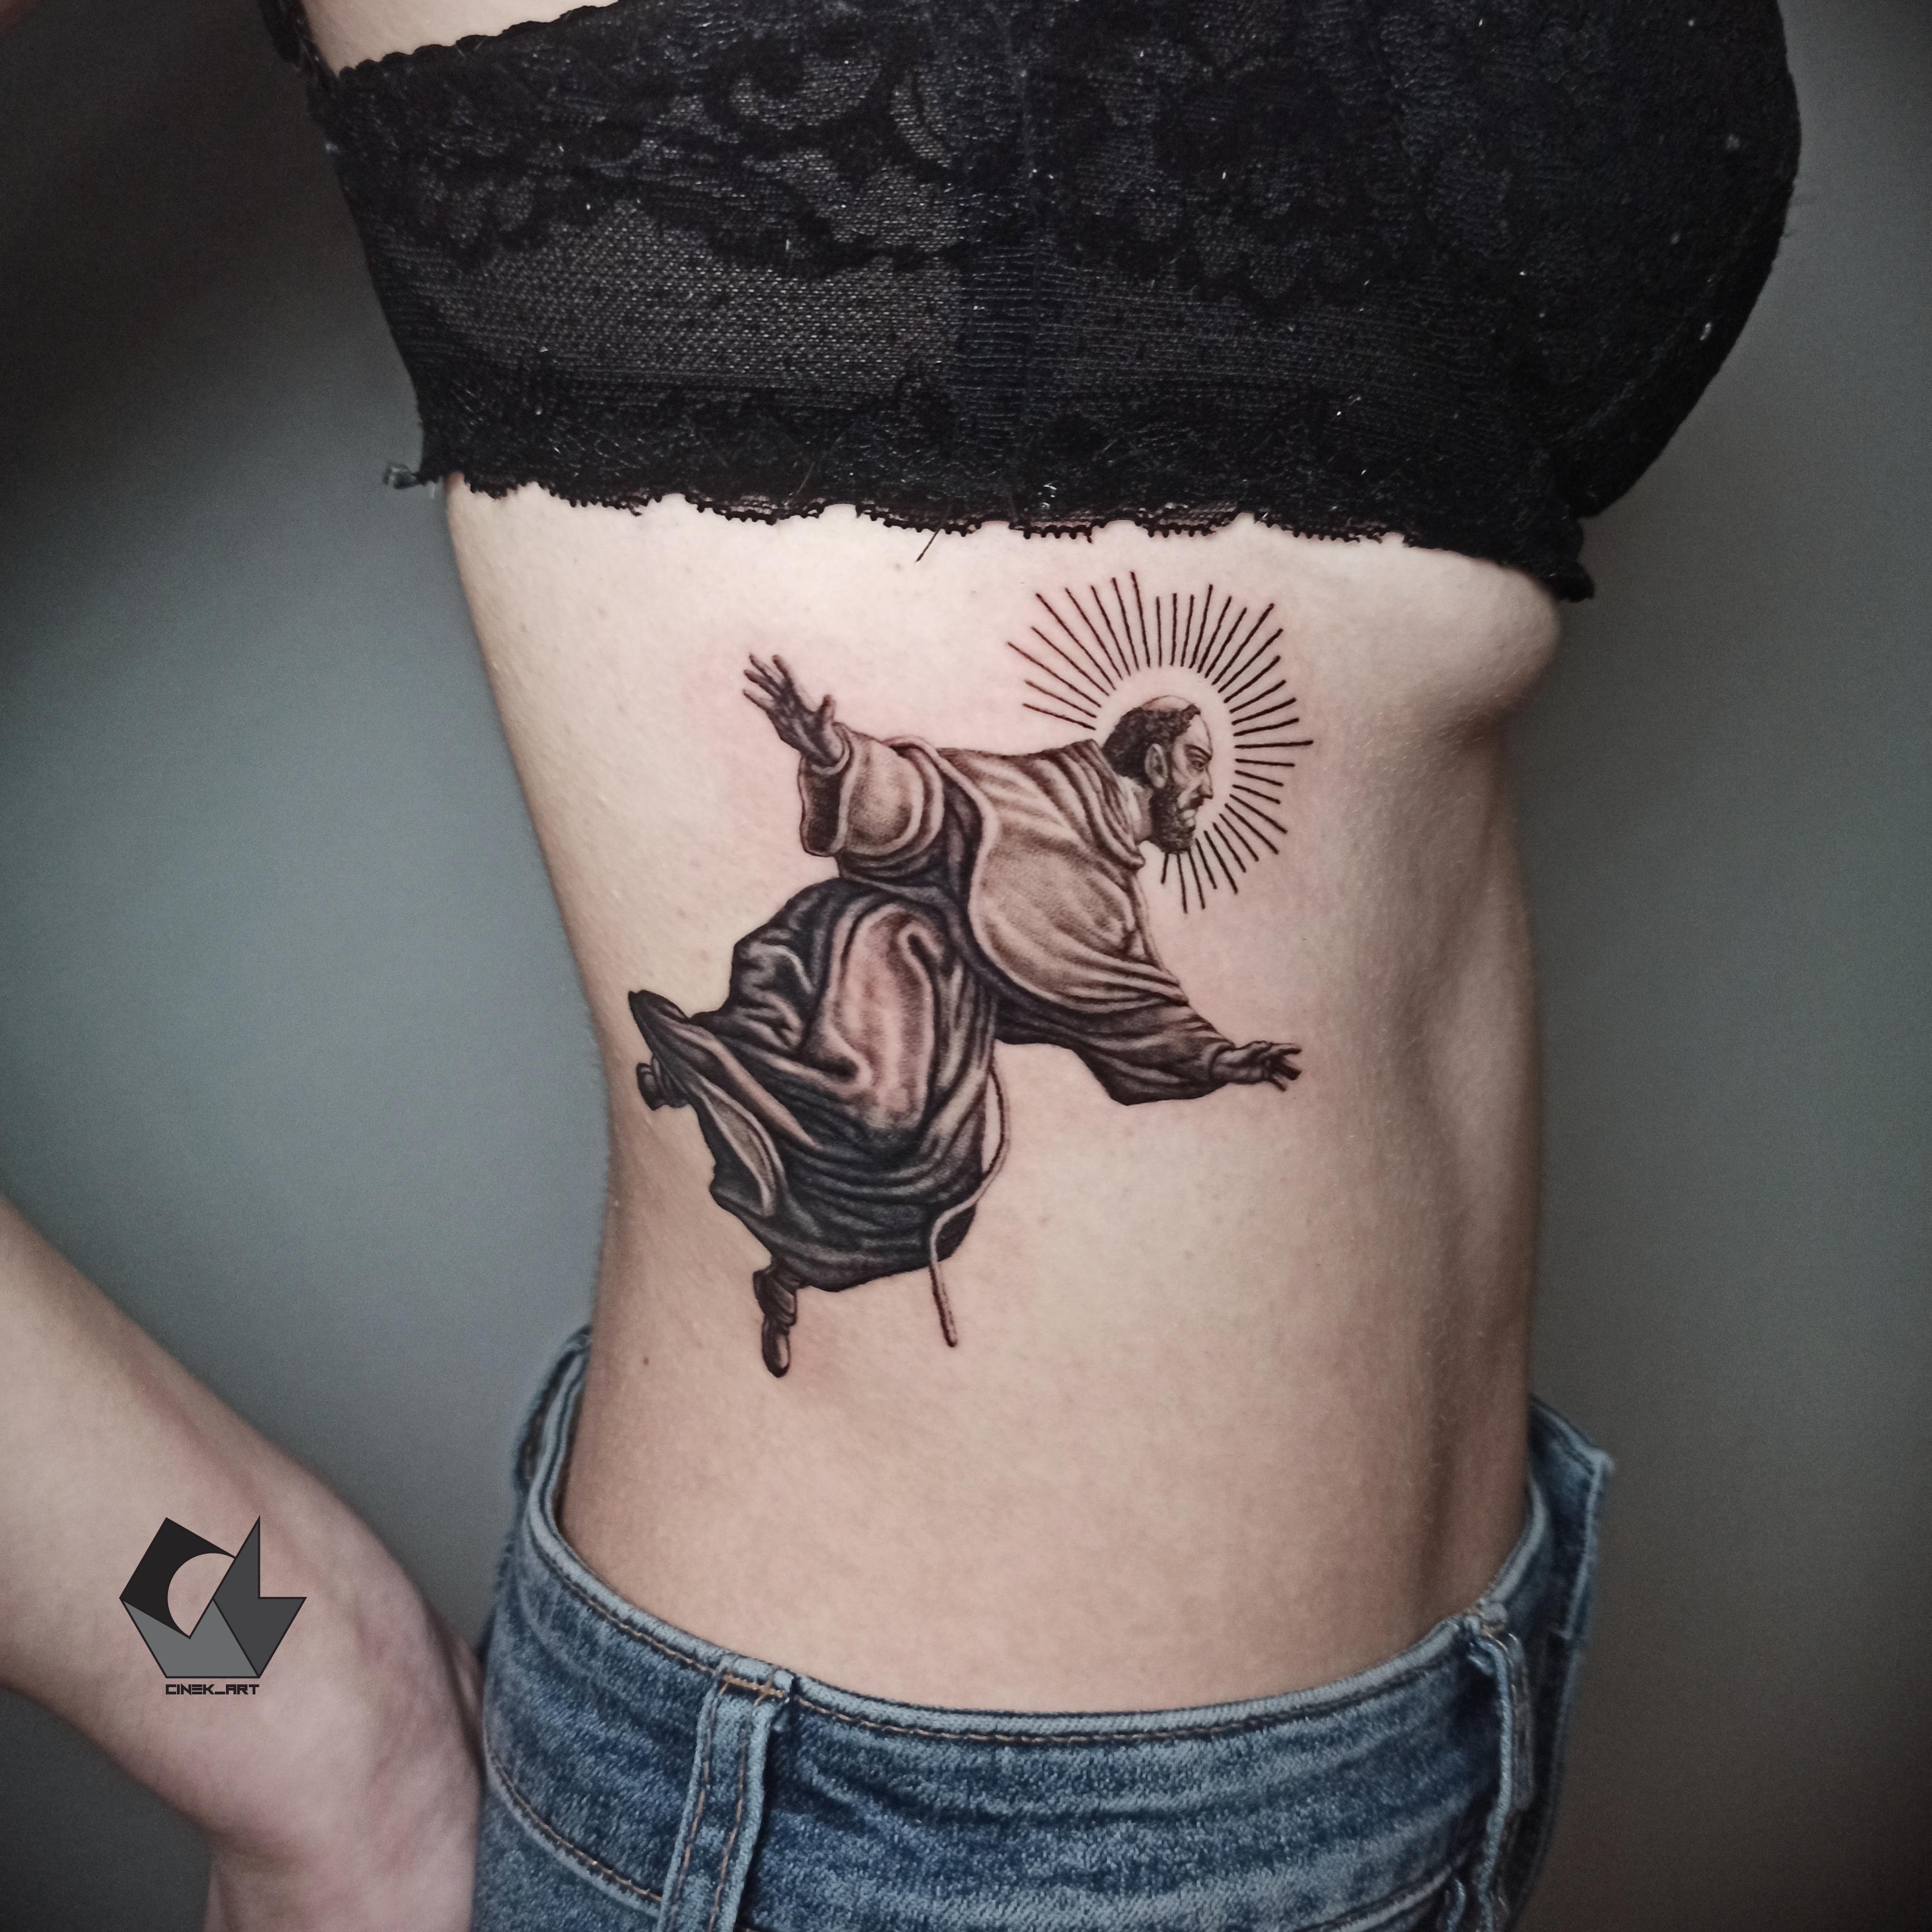 Inksearch tattoo Marcin Krawczyk